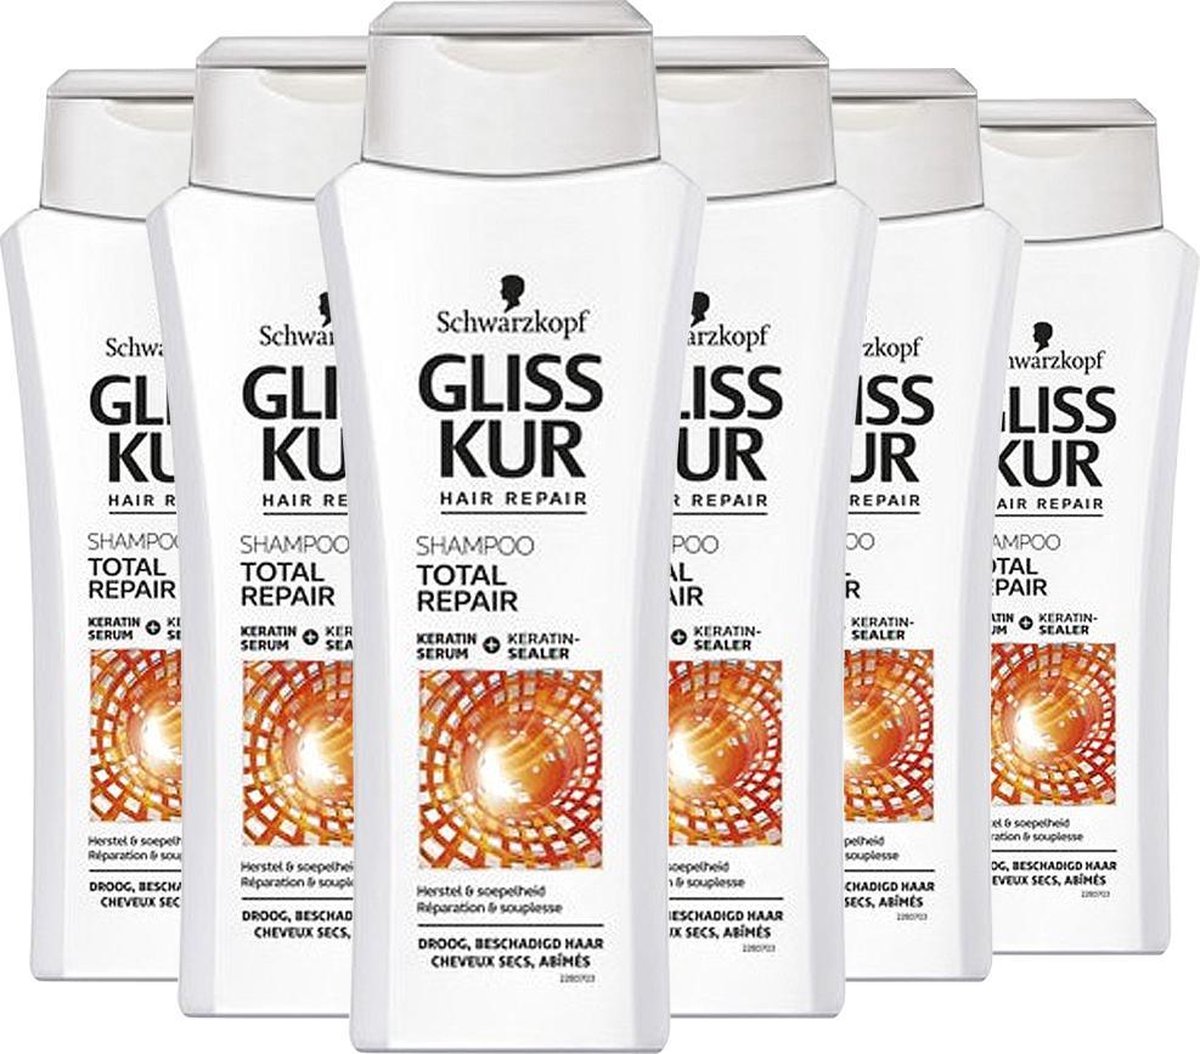 Schwarzkopf Gliss Kur Shampoo Total Repair Keratin Serum & Sealer Multi Pack - 6 x 250 ml